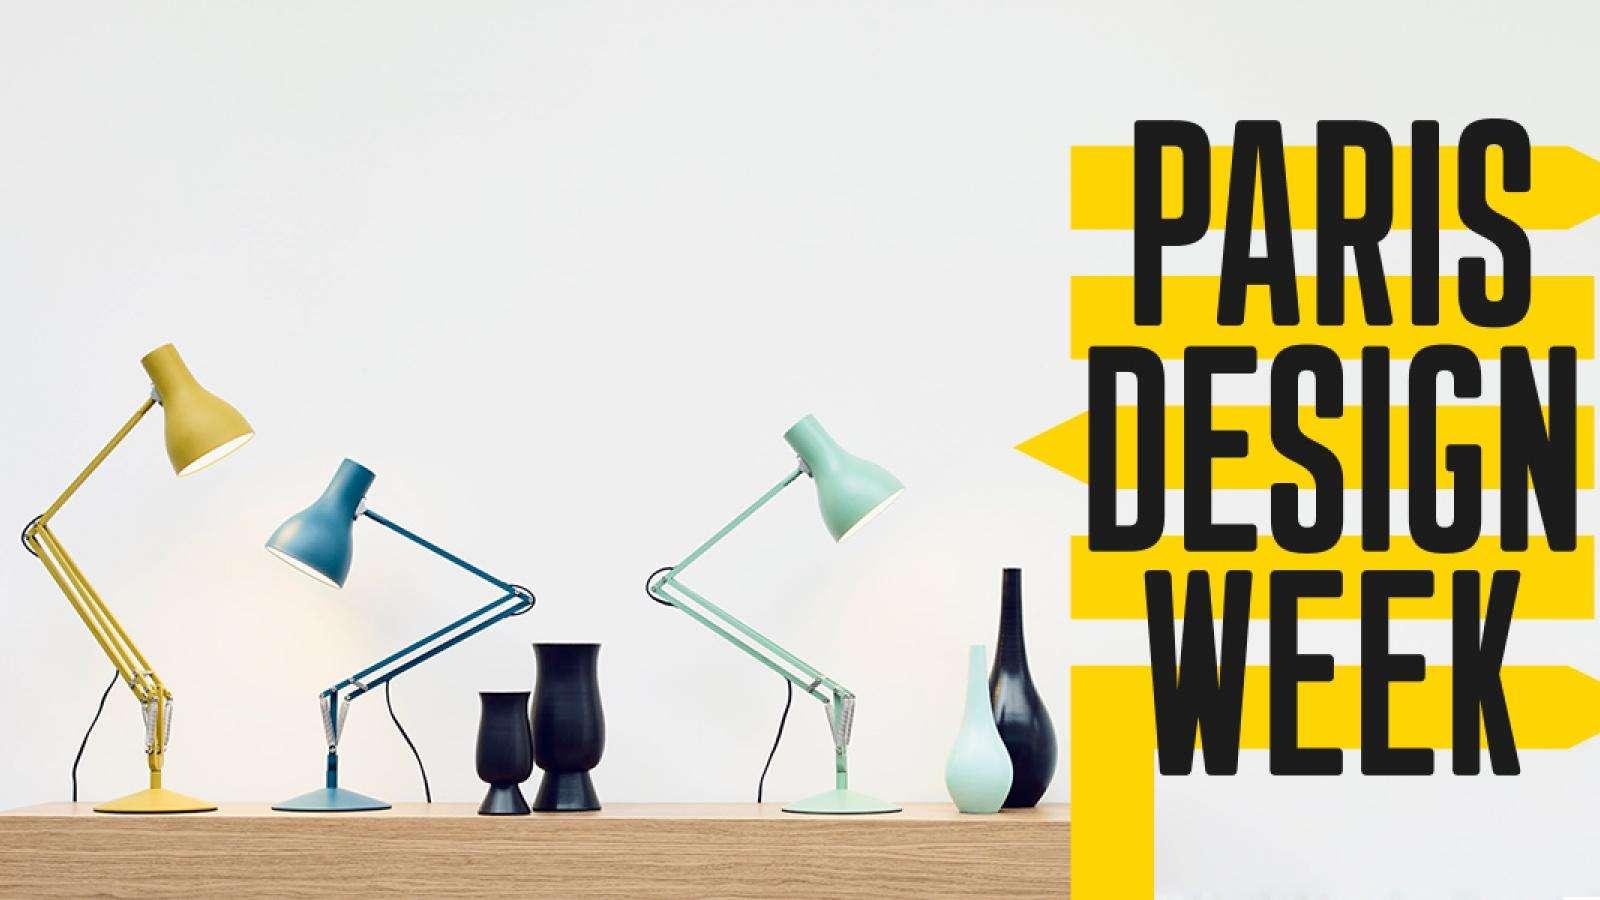 Paris Design Week - a city-wide event